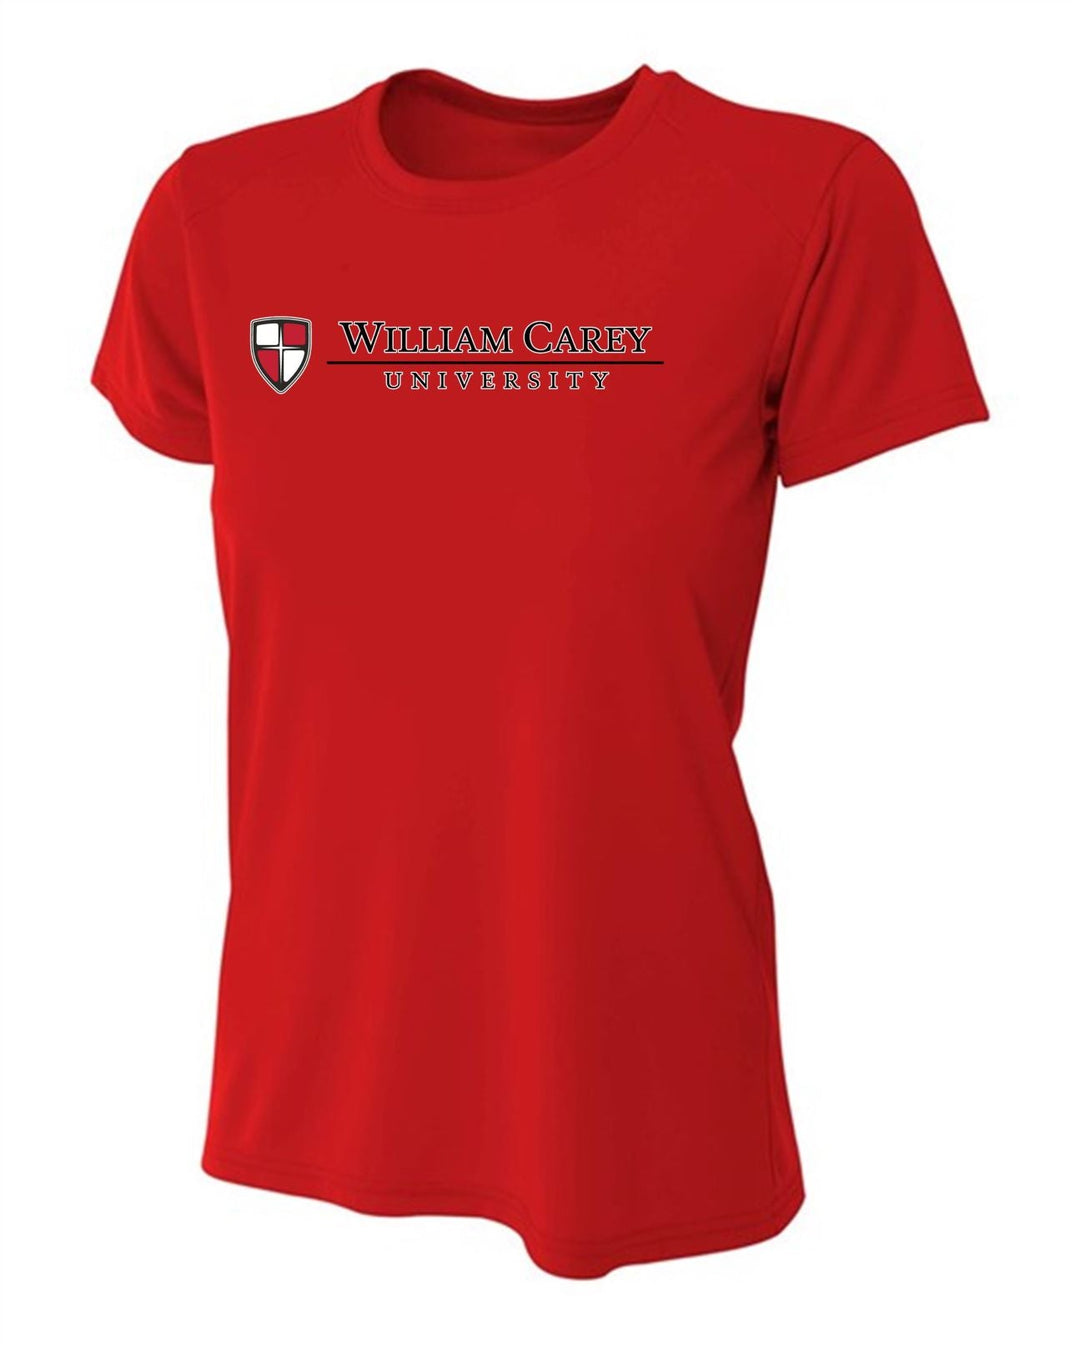 WCU Baton Rouge Women's Short-Sleeve Performance Shirt WCU BR Red Womens Small - Third Coast Soccer